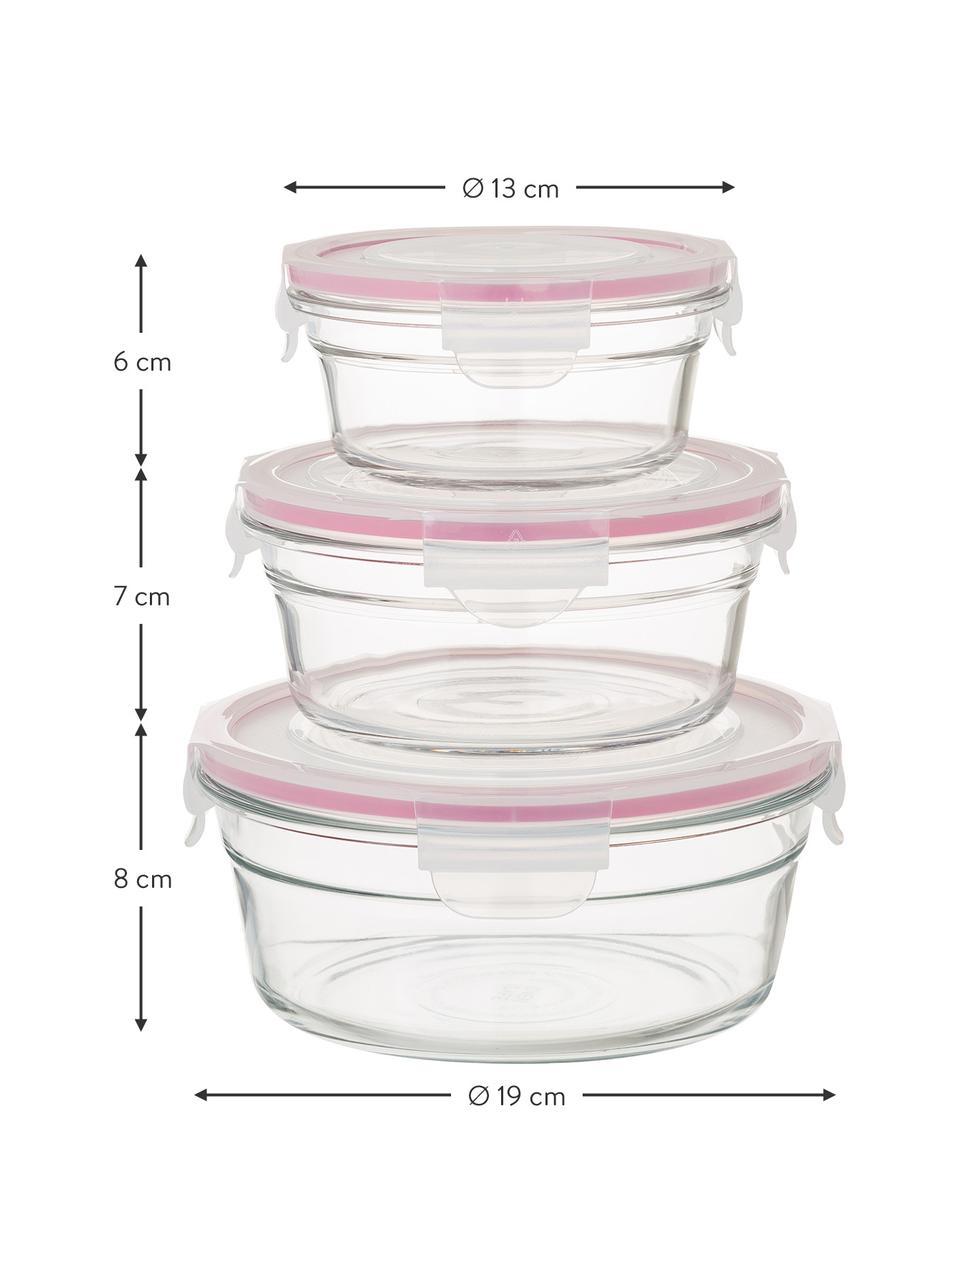 Set de recipientes herméticos Romy, 3 pzas., Recipiente: vidrio templado, libre de, Transparente, rosa, Set de diferentes tamaños